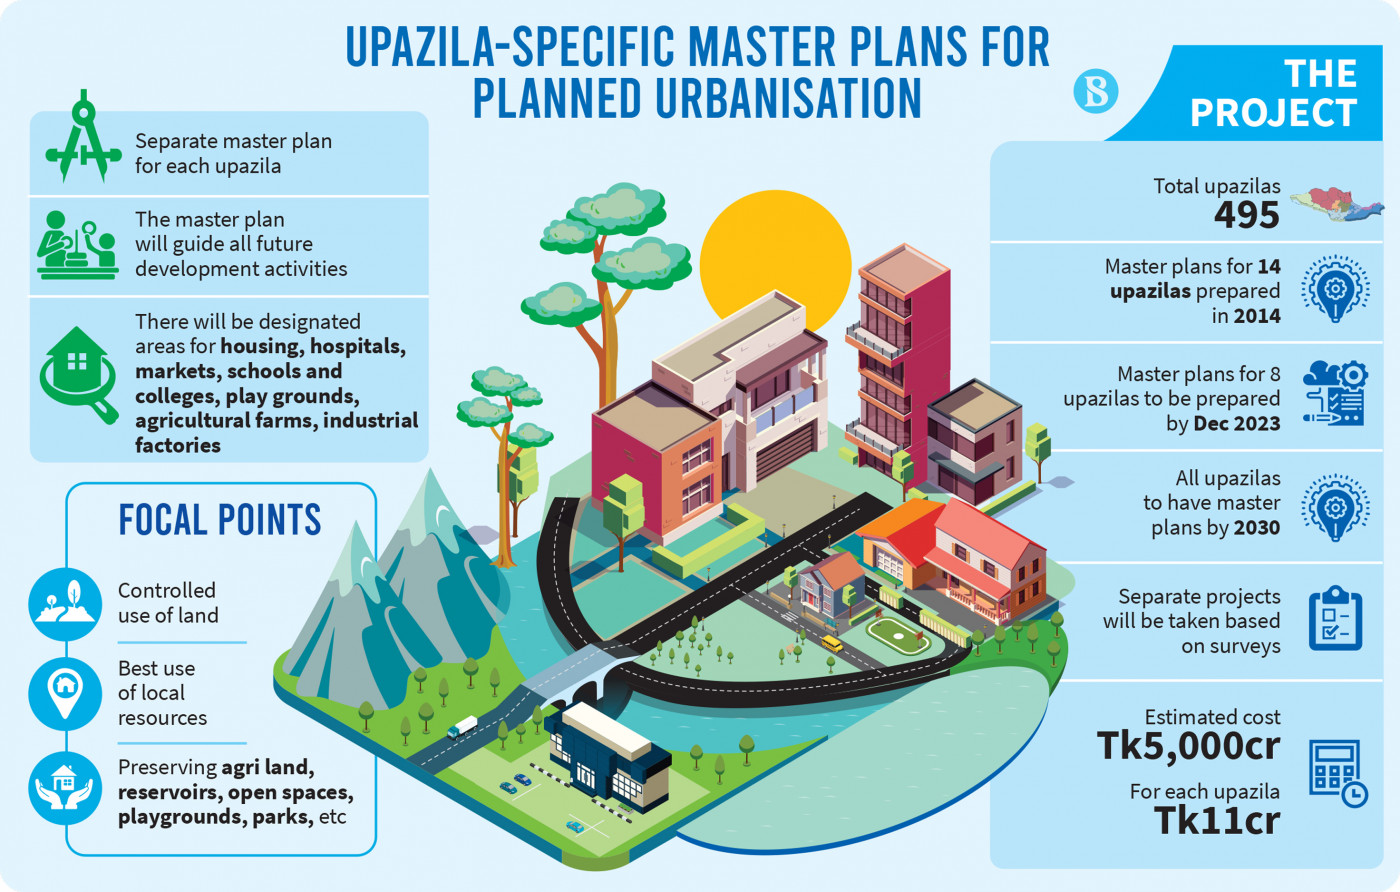 upazila-specific-master-plans-for-planned-urbanisation.jpg